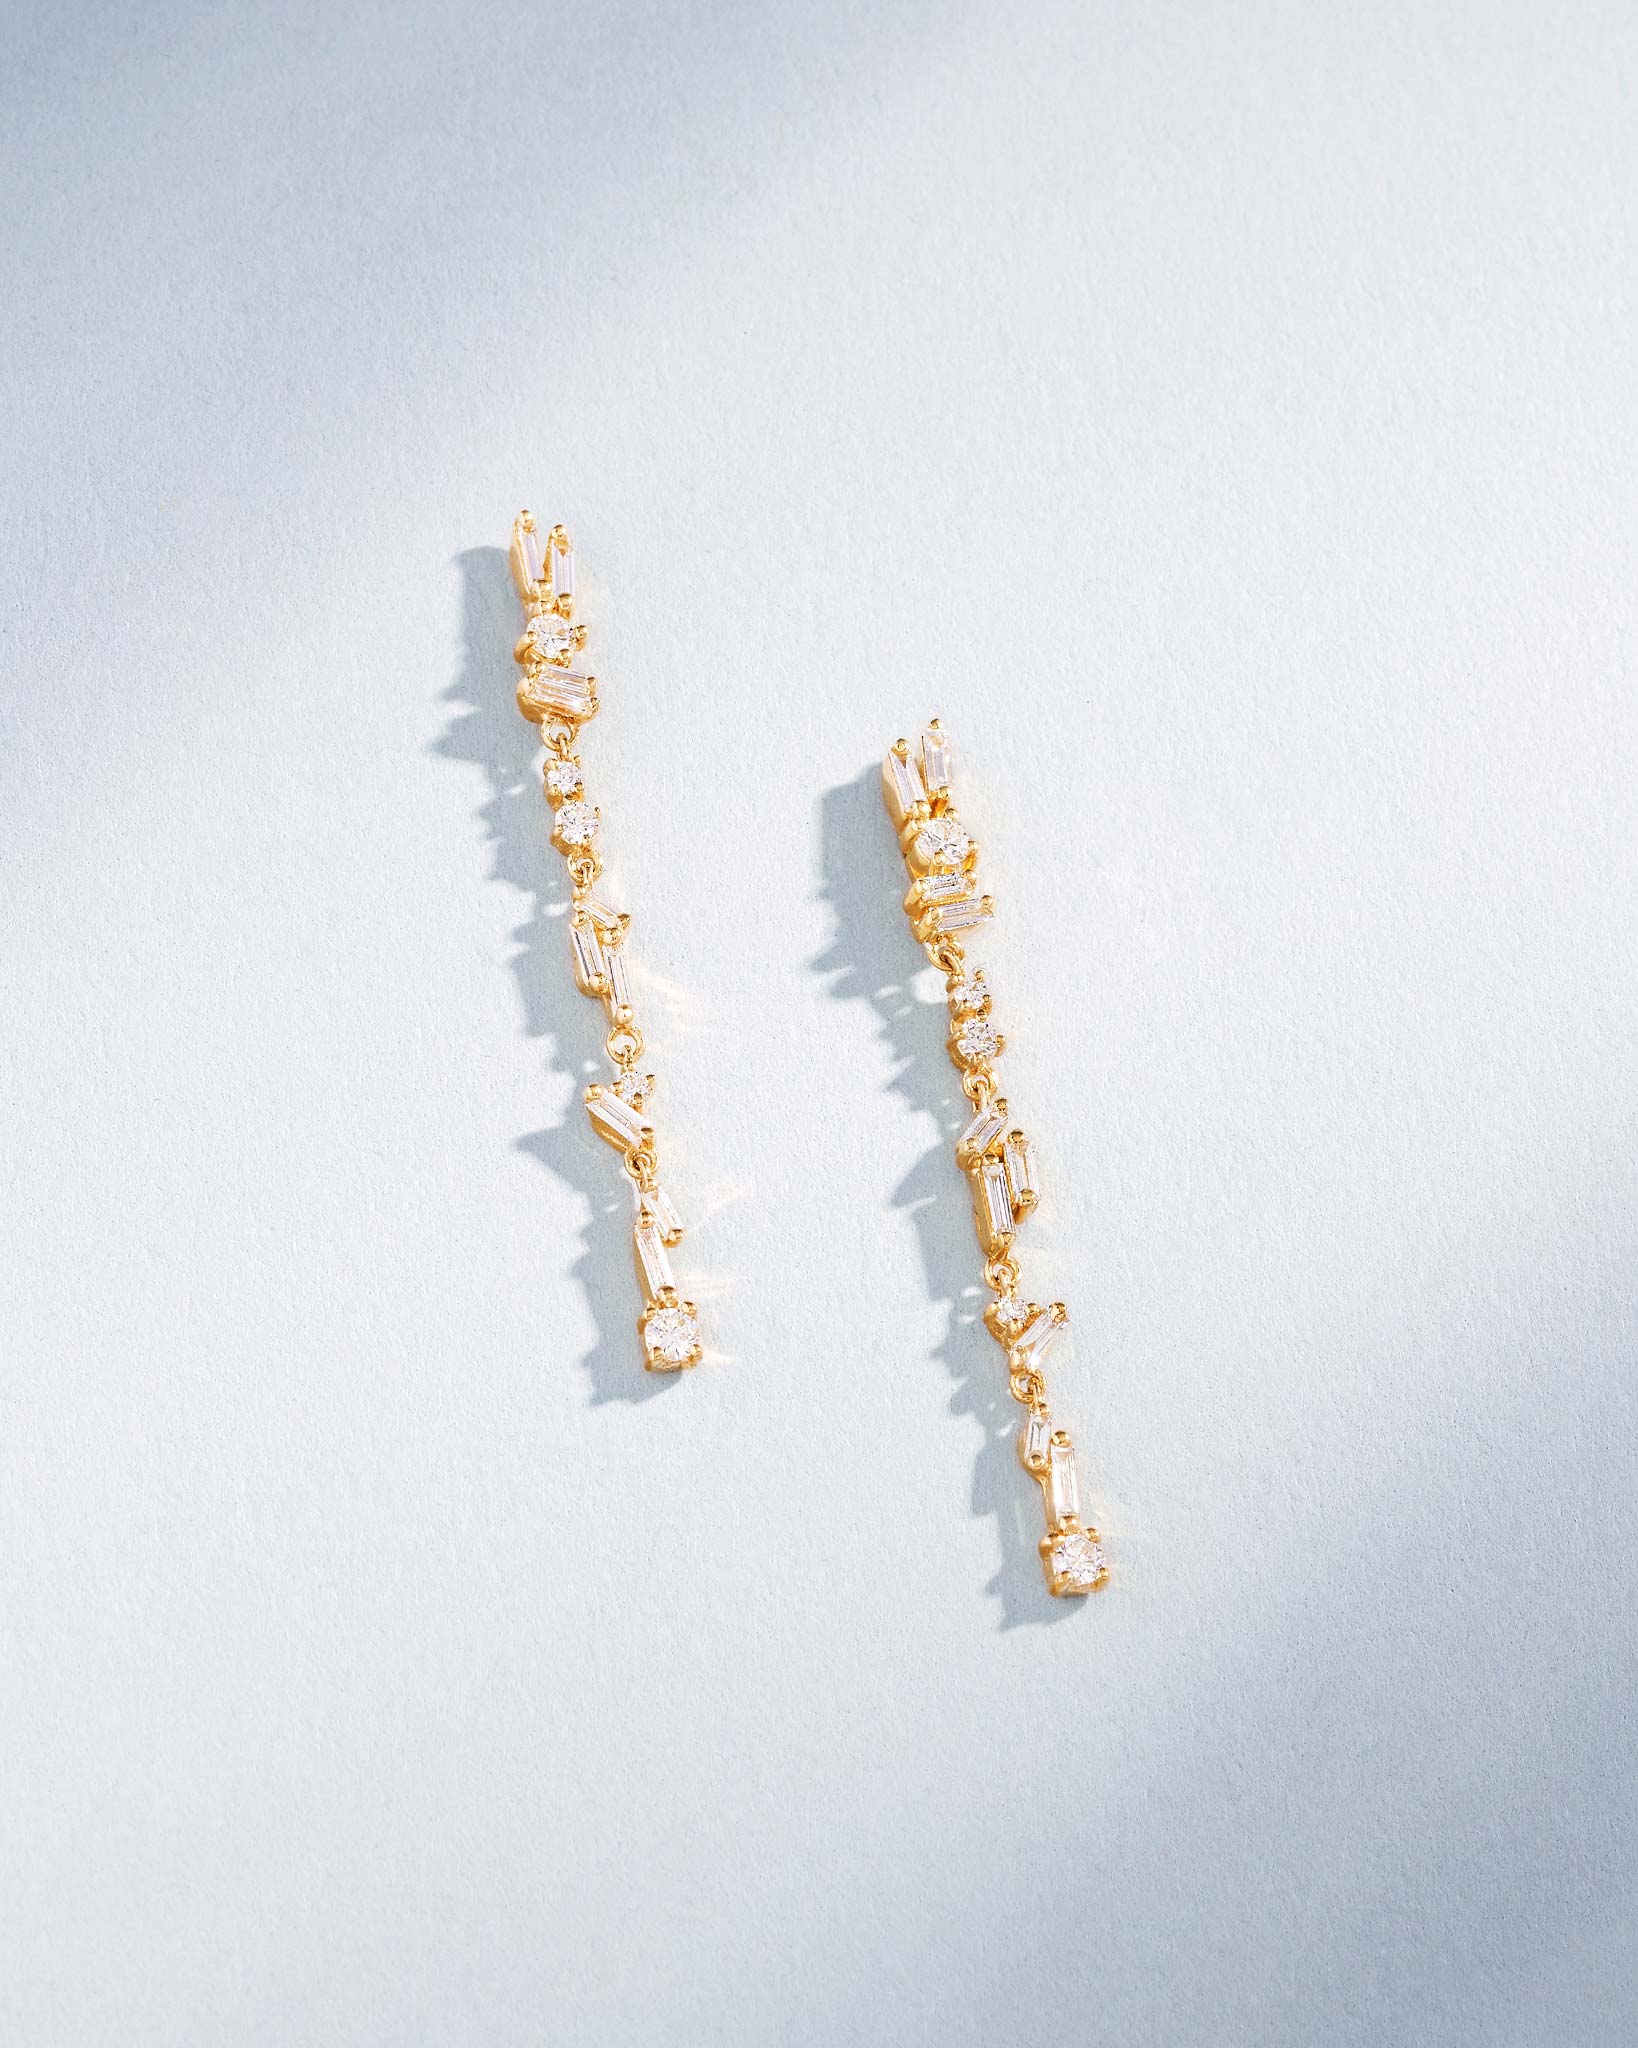 Suzanne Kalan Classic Diamond Sparkler Drop Earrings in 18k yellow gold